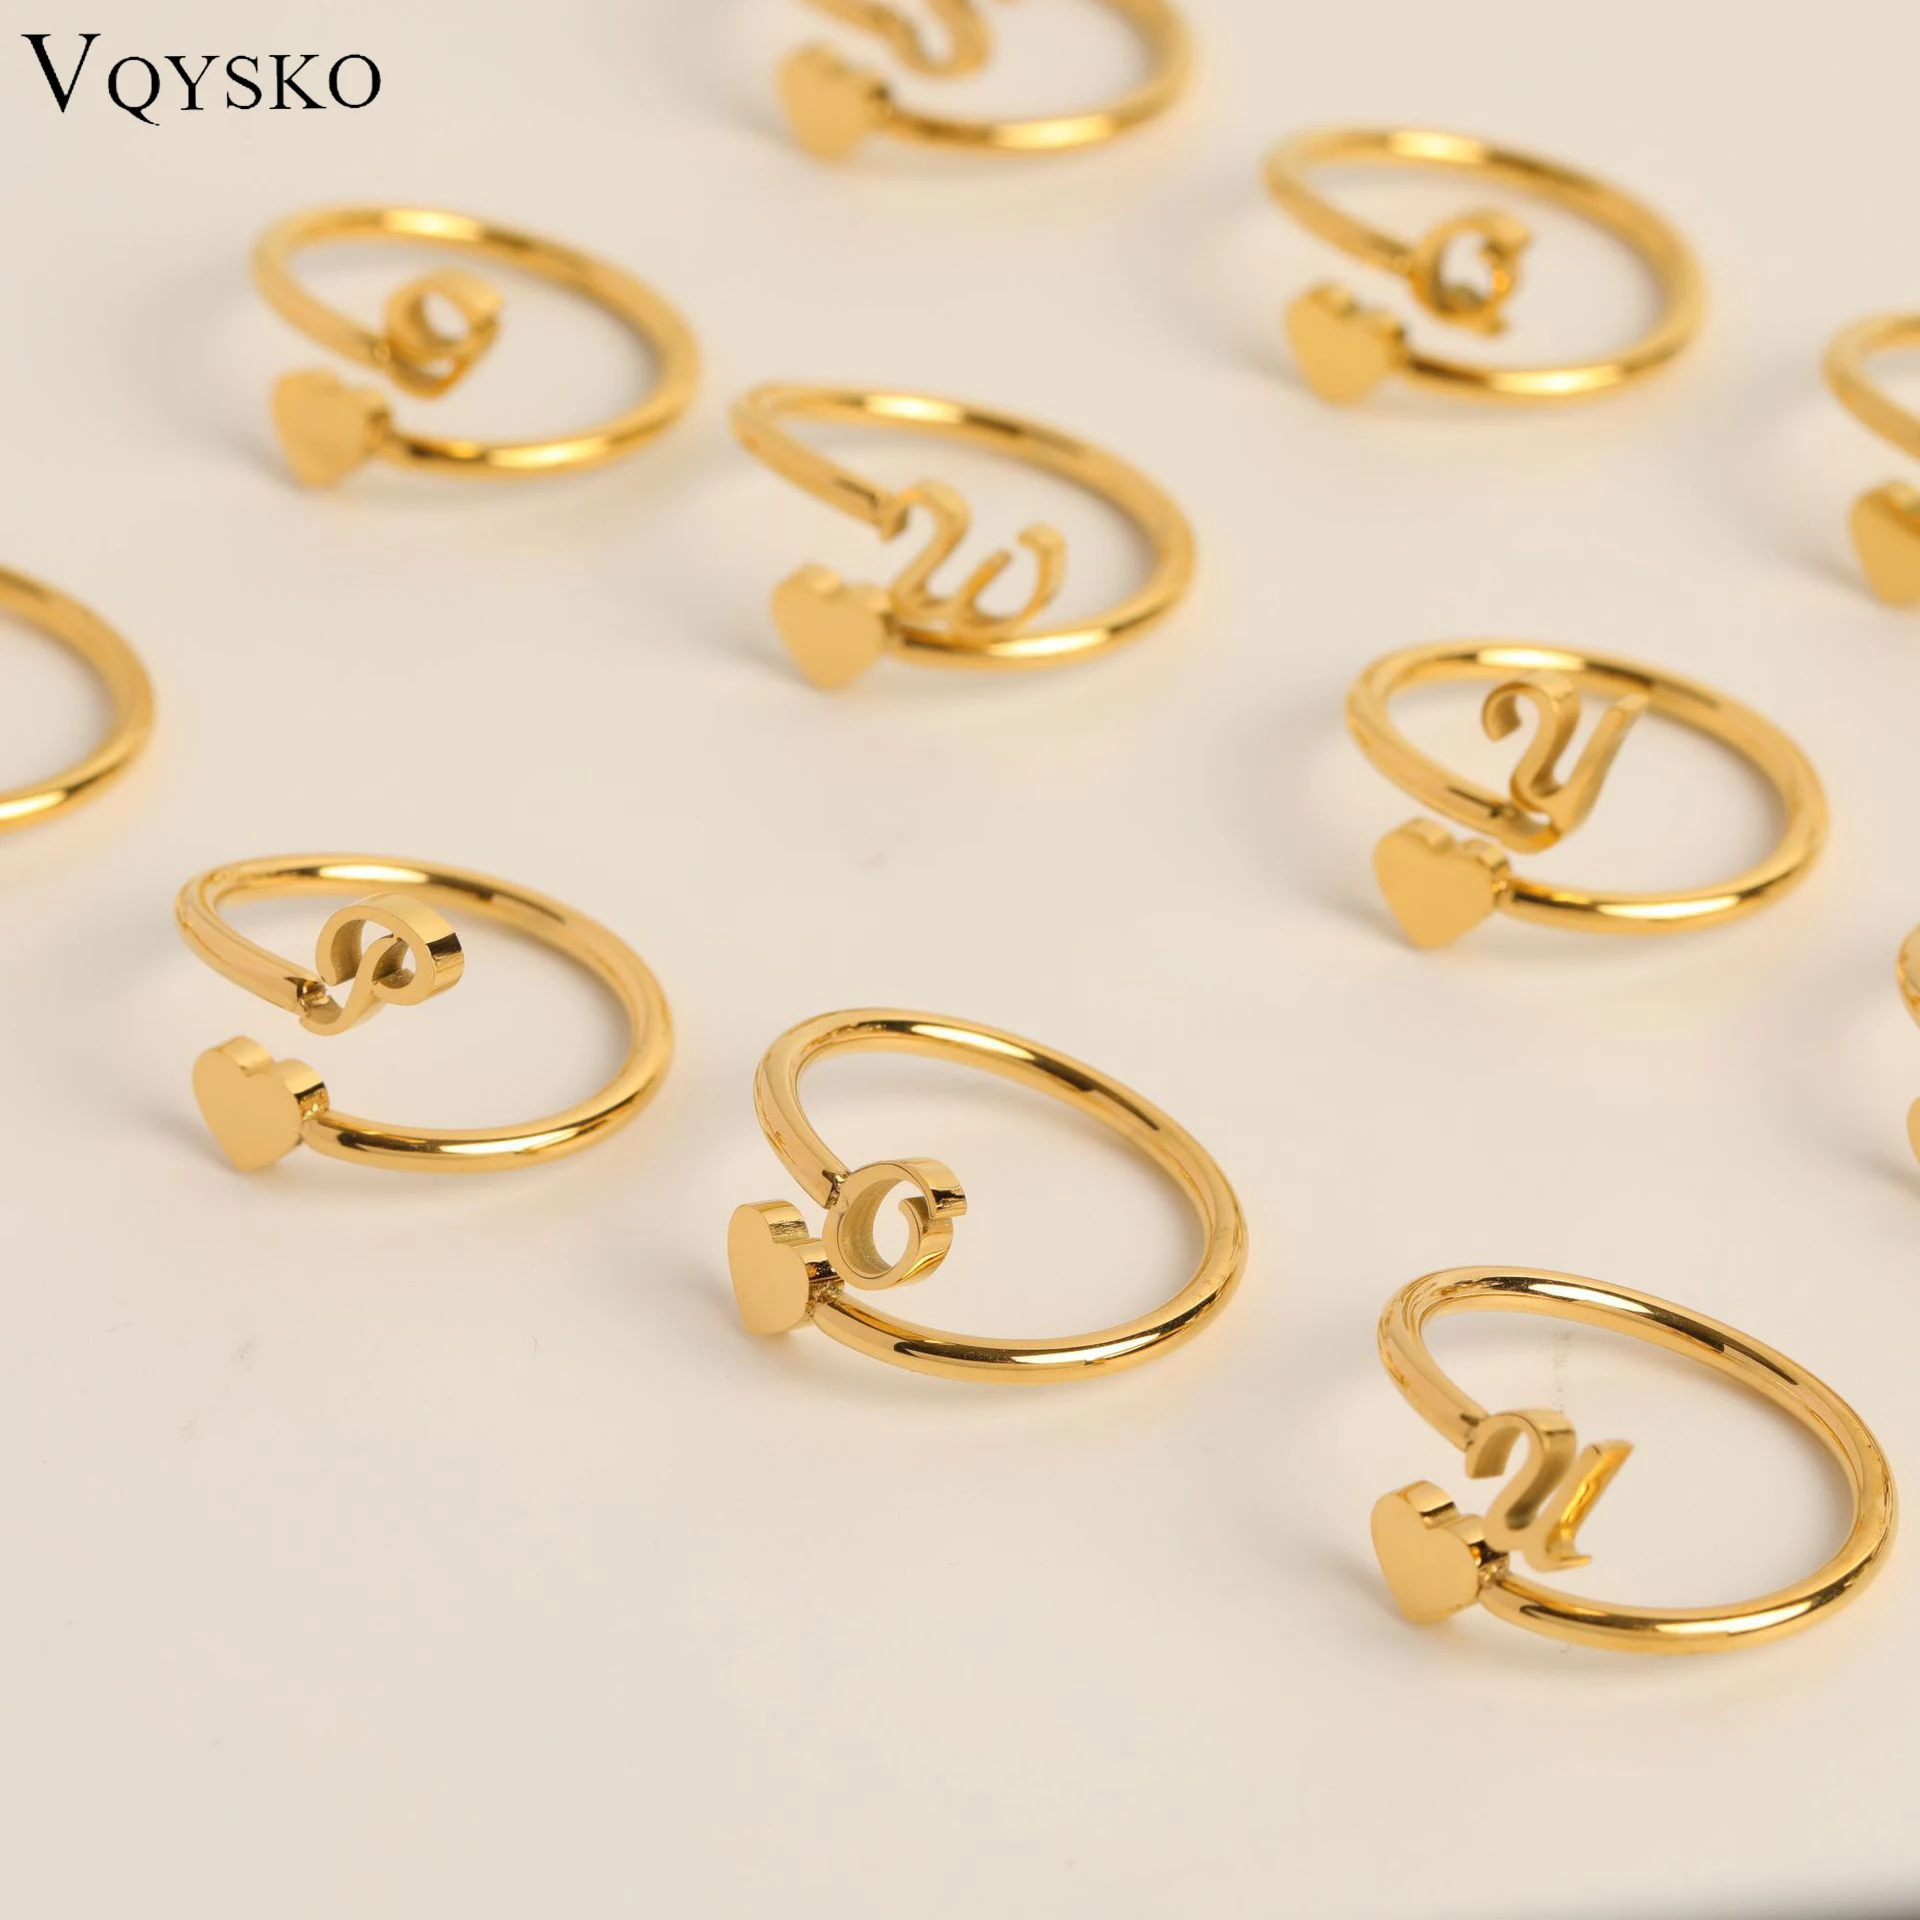 

VQYSKO Personalized Open Heart Custom Initials Love Ring Adjustable Thin Perfect Mothers Cute Anniversary Gift Tiny Jewelry